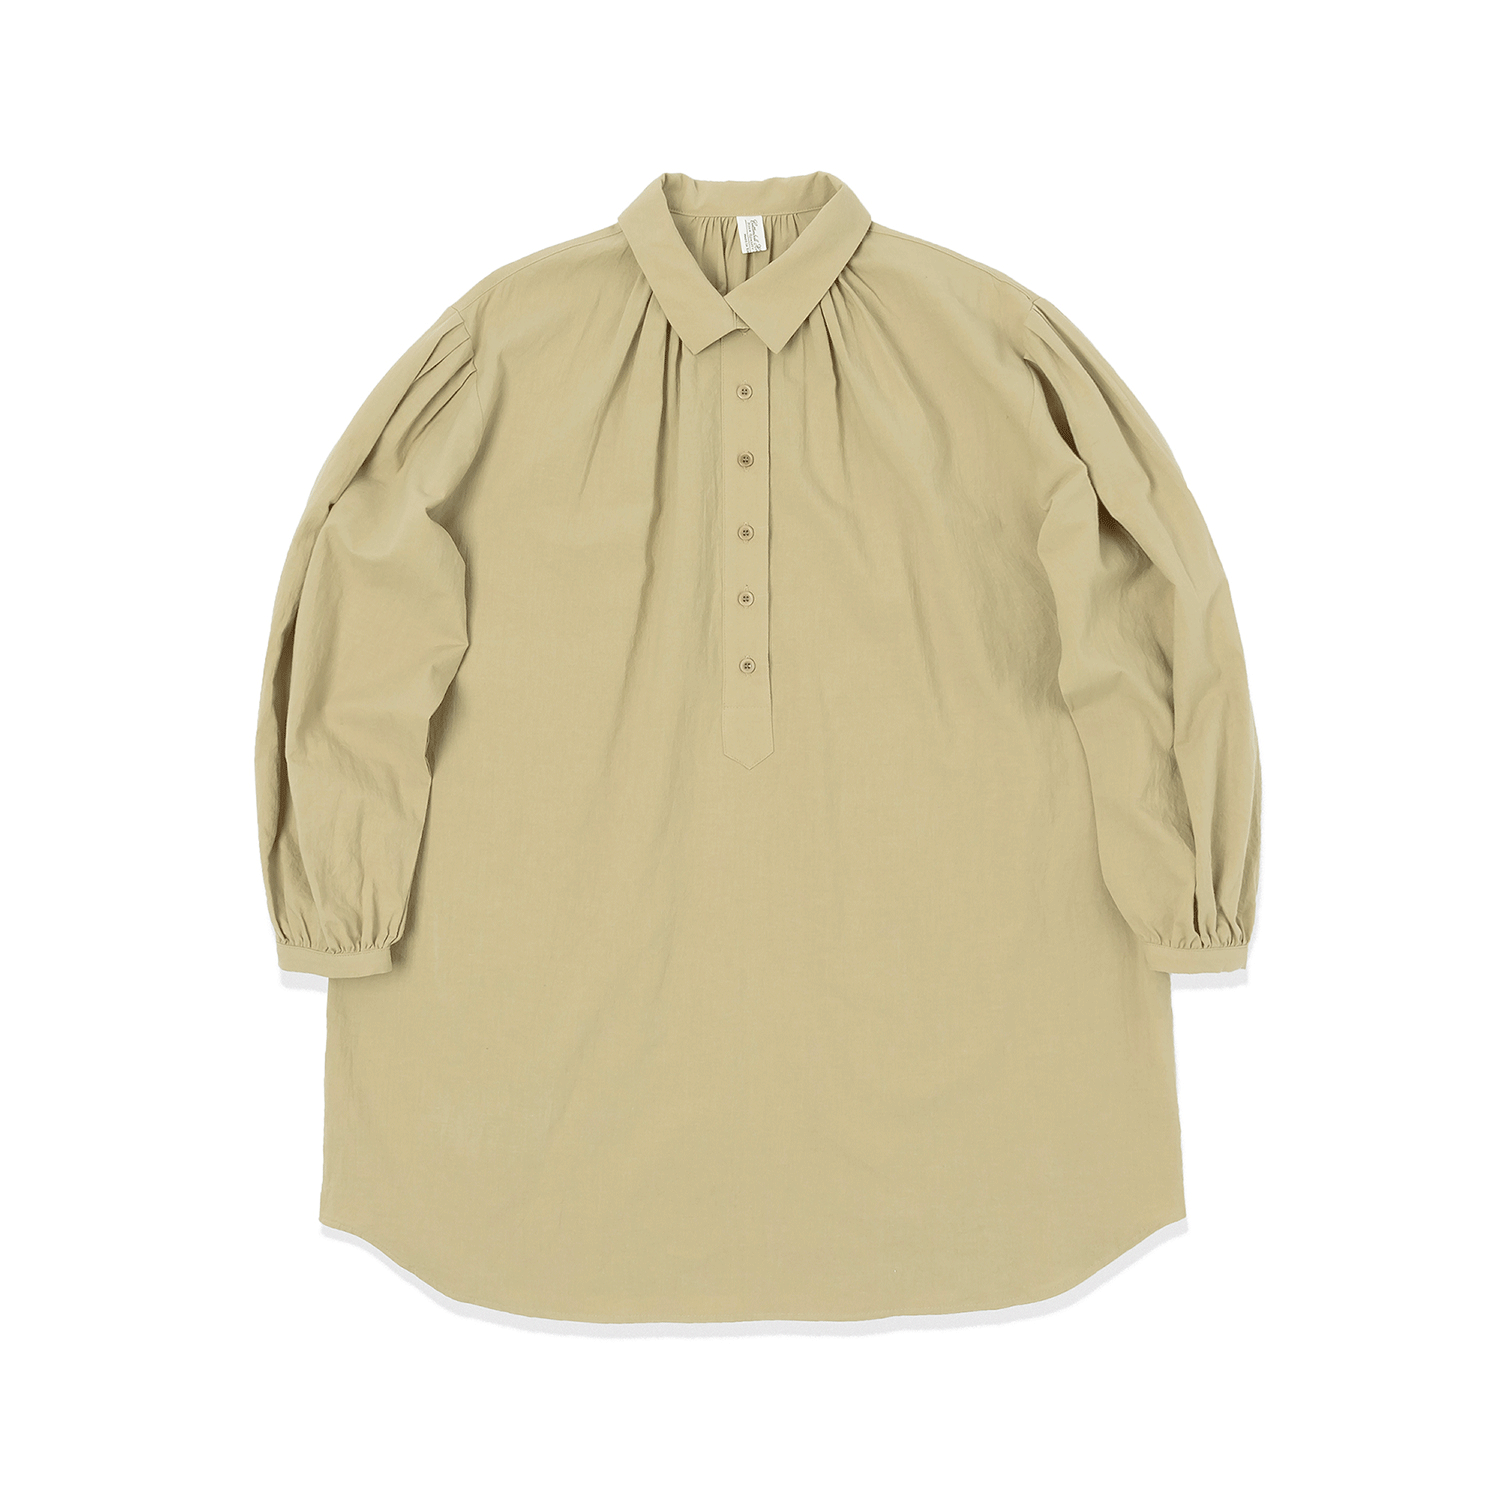 Overlap Collar Long Shirts - Sand Beige